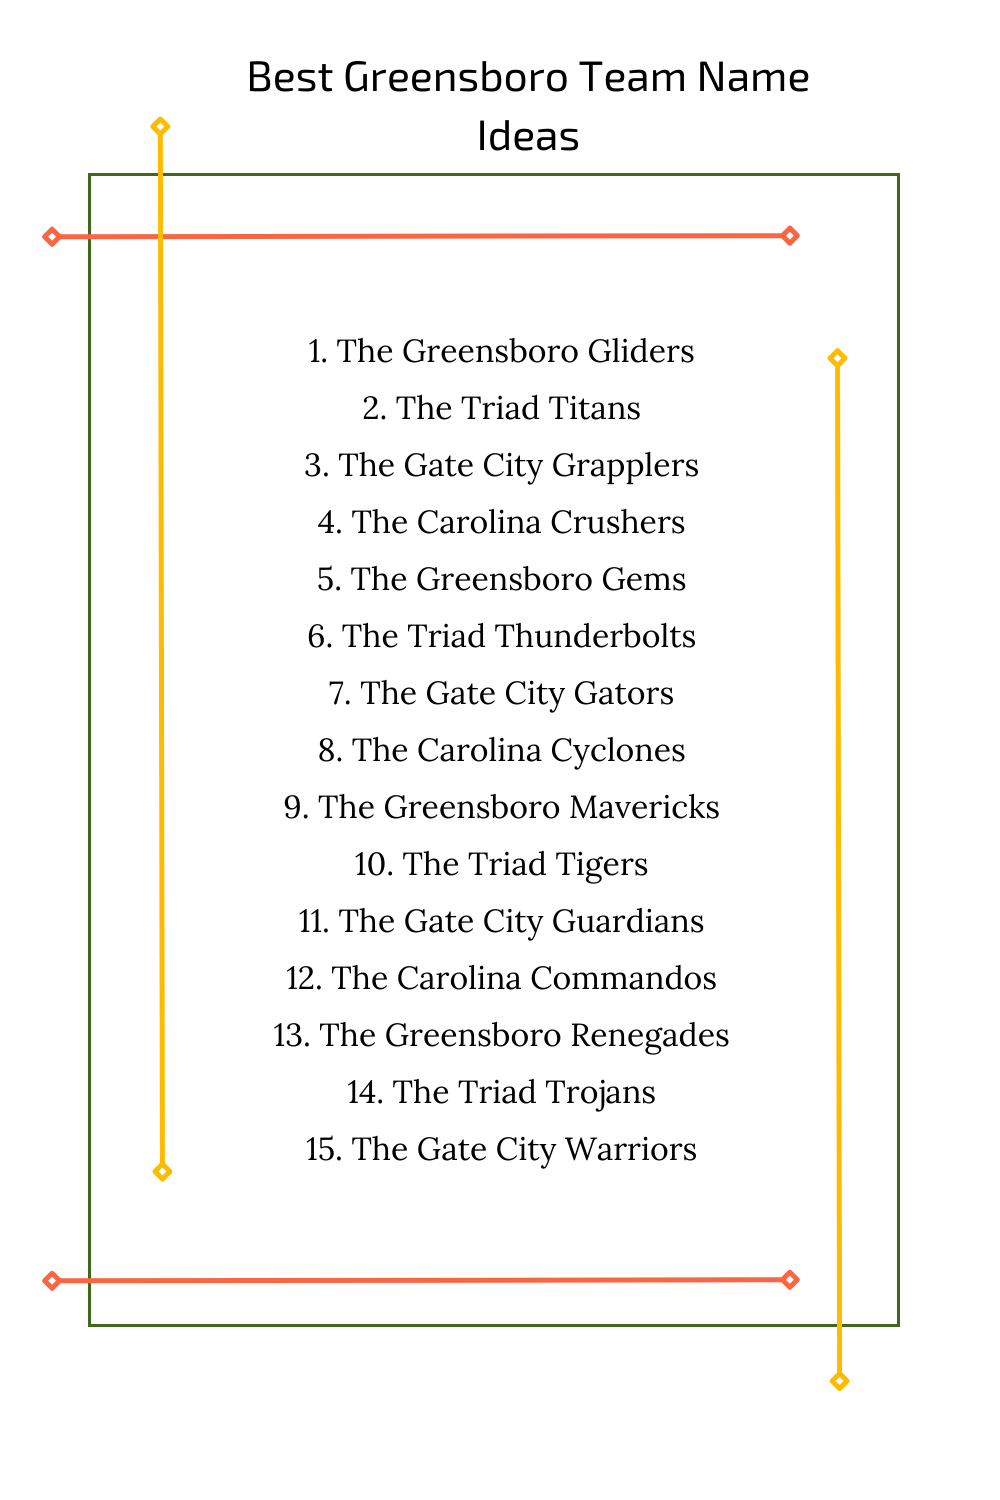 Best Greensboro Team Name Ideas